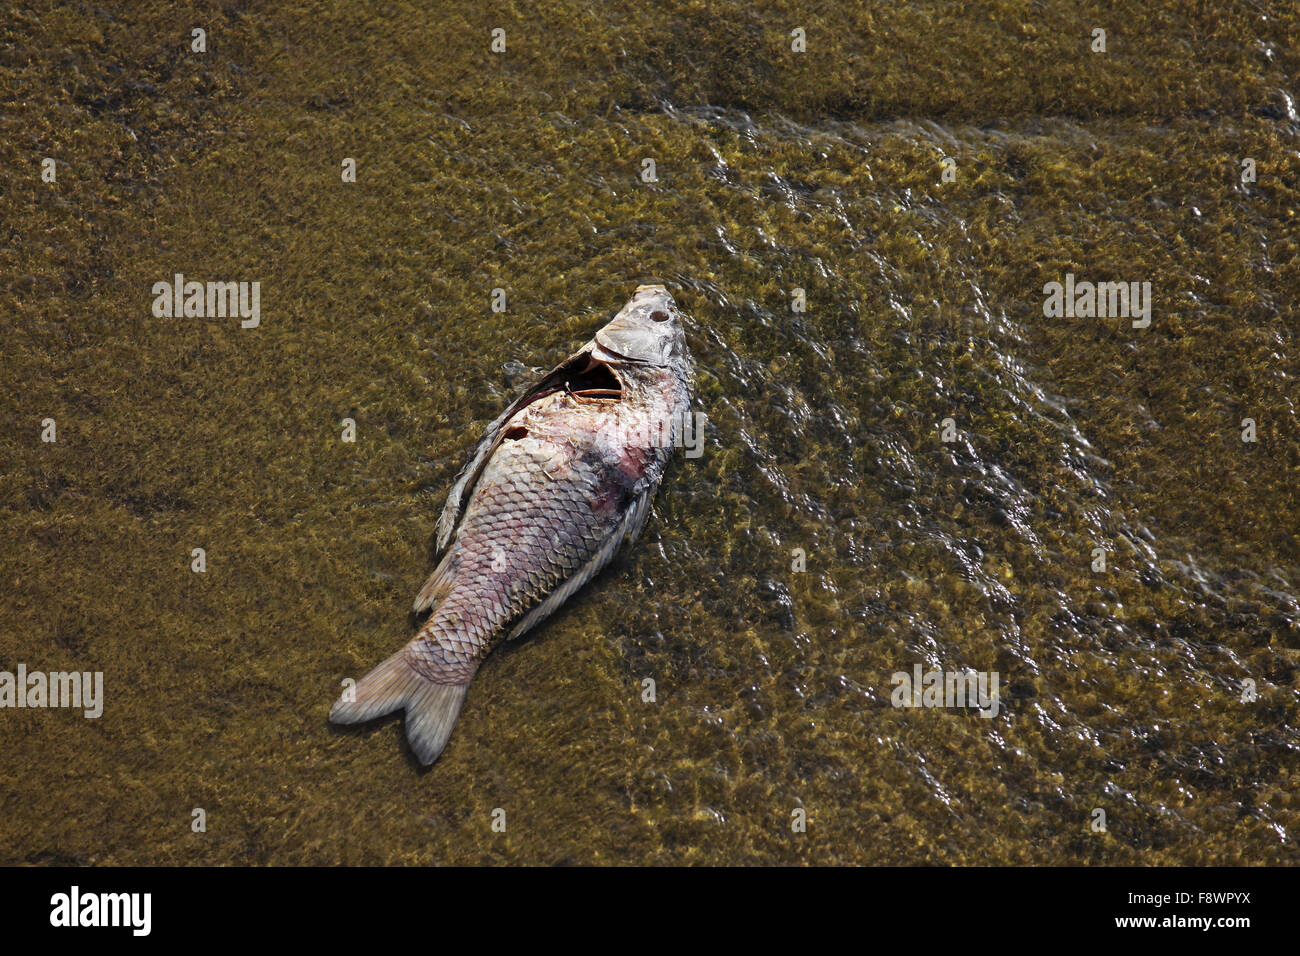 Dead fish in shallow water, Purkersdorf, Austria Stock Photo